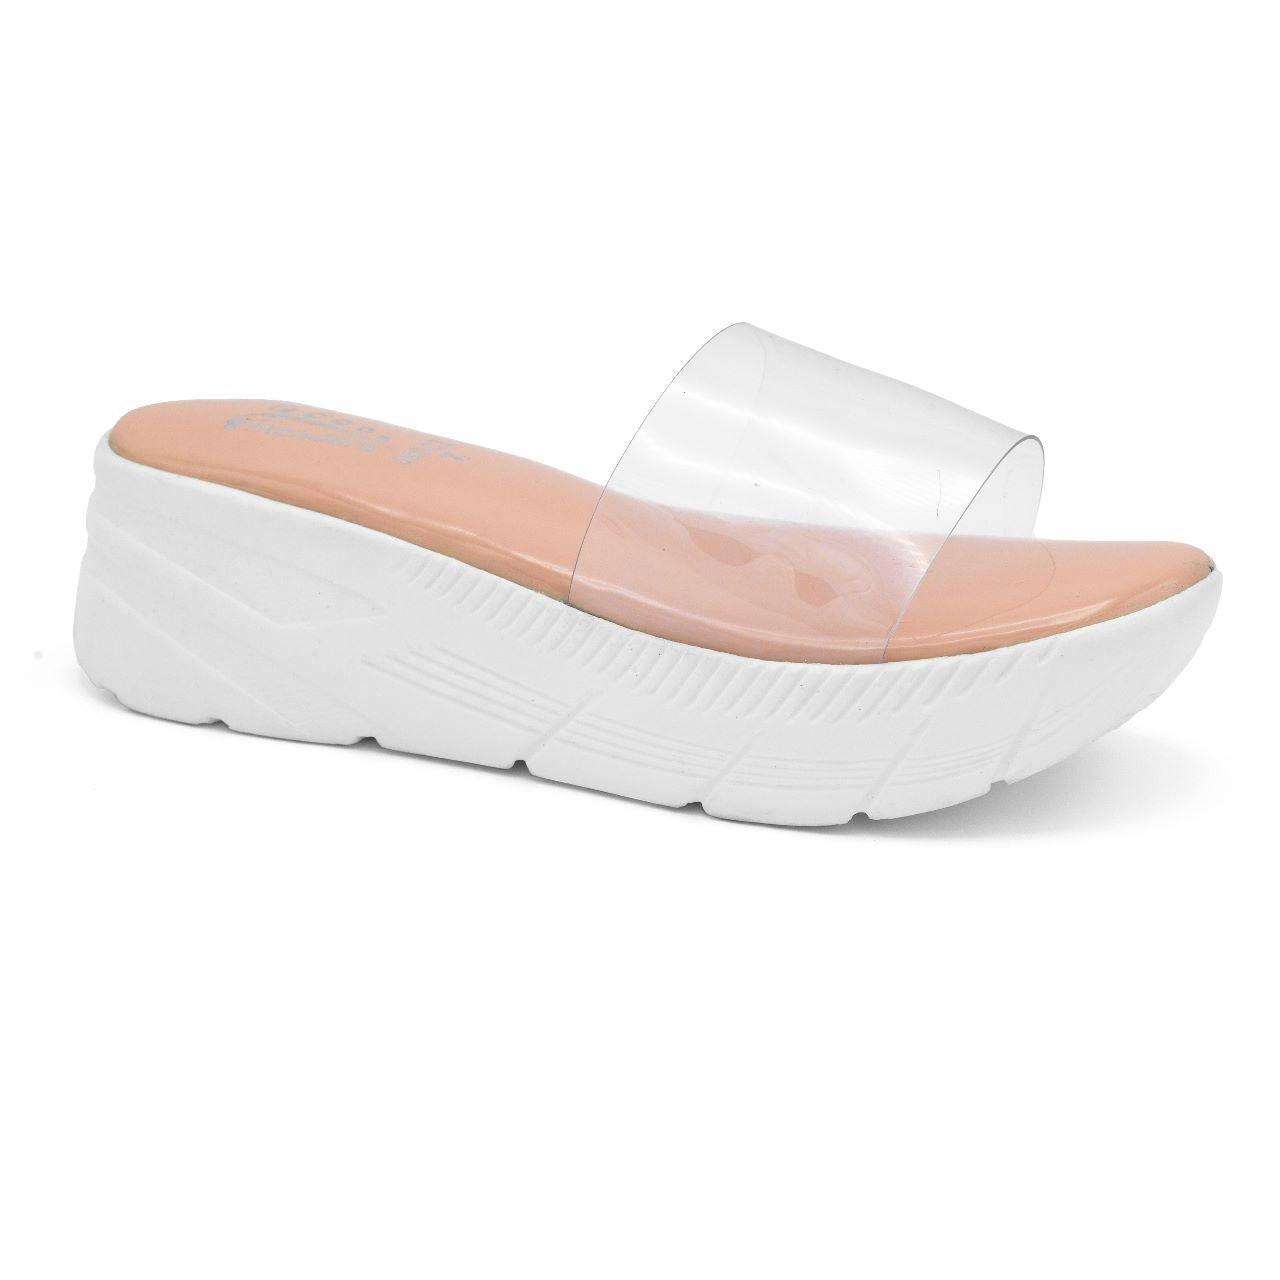 Transparent sole slipper